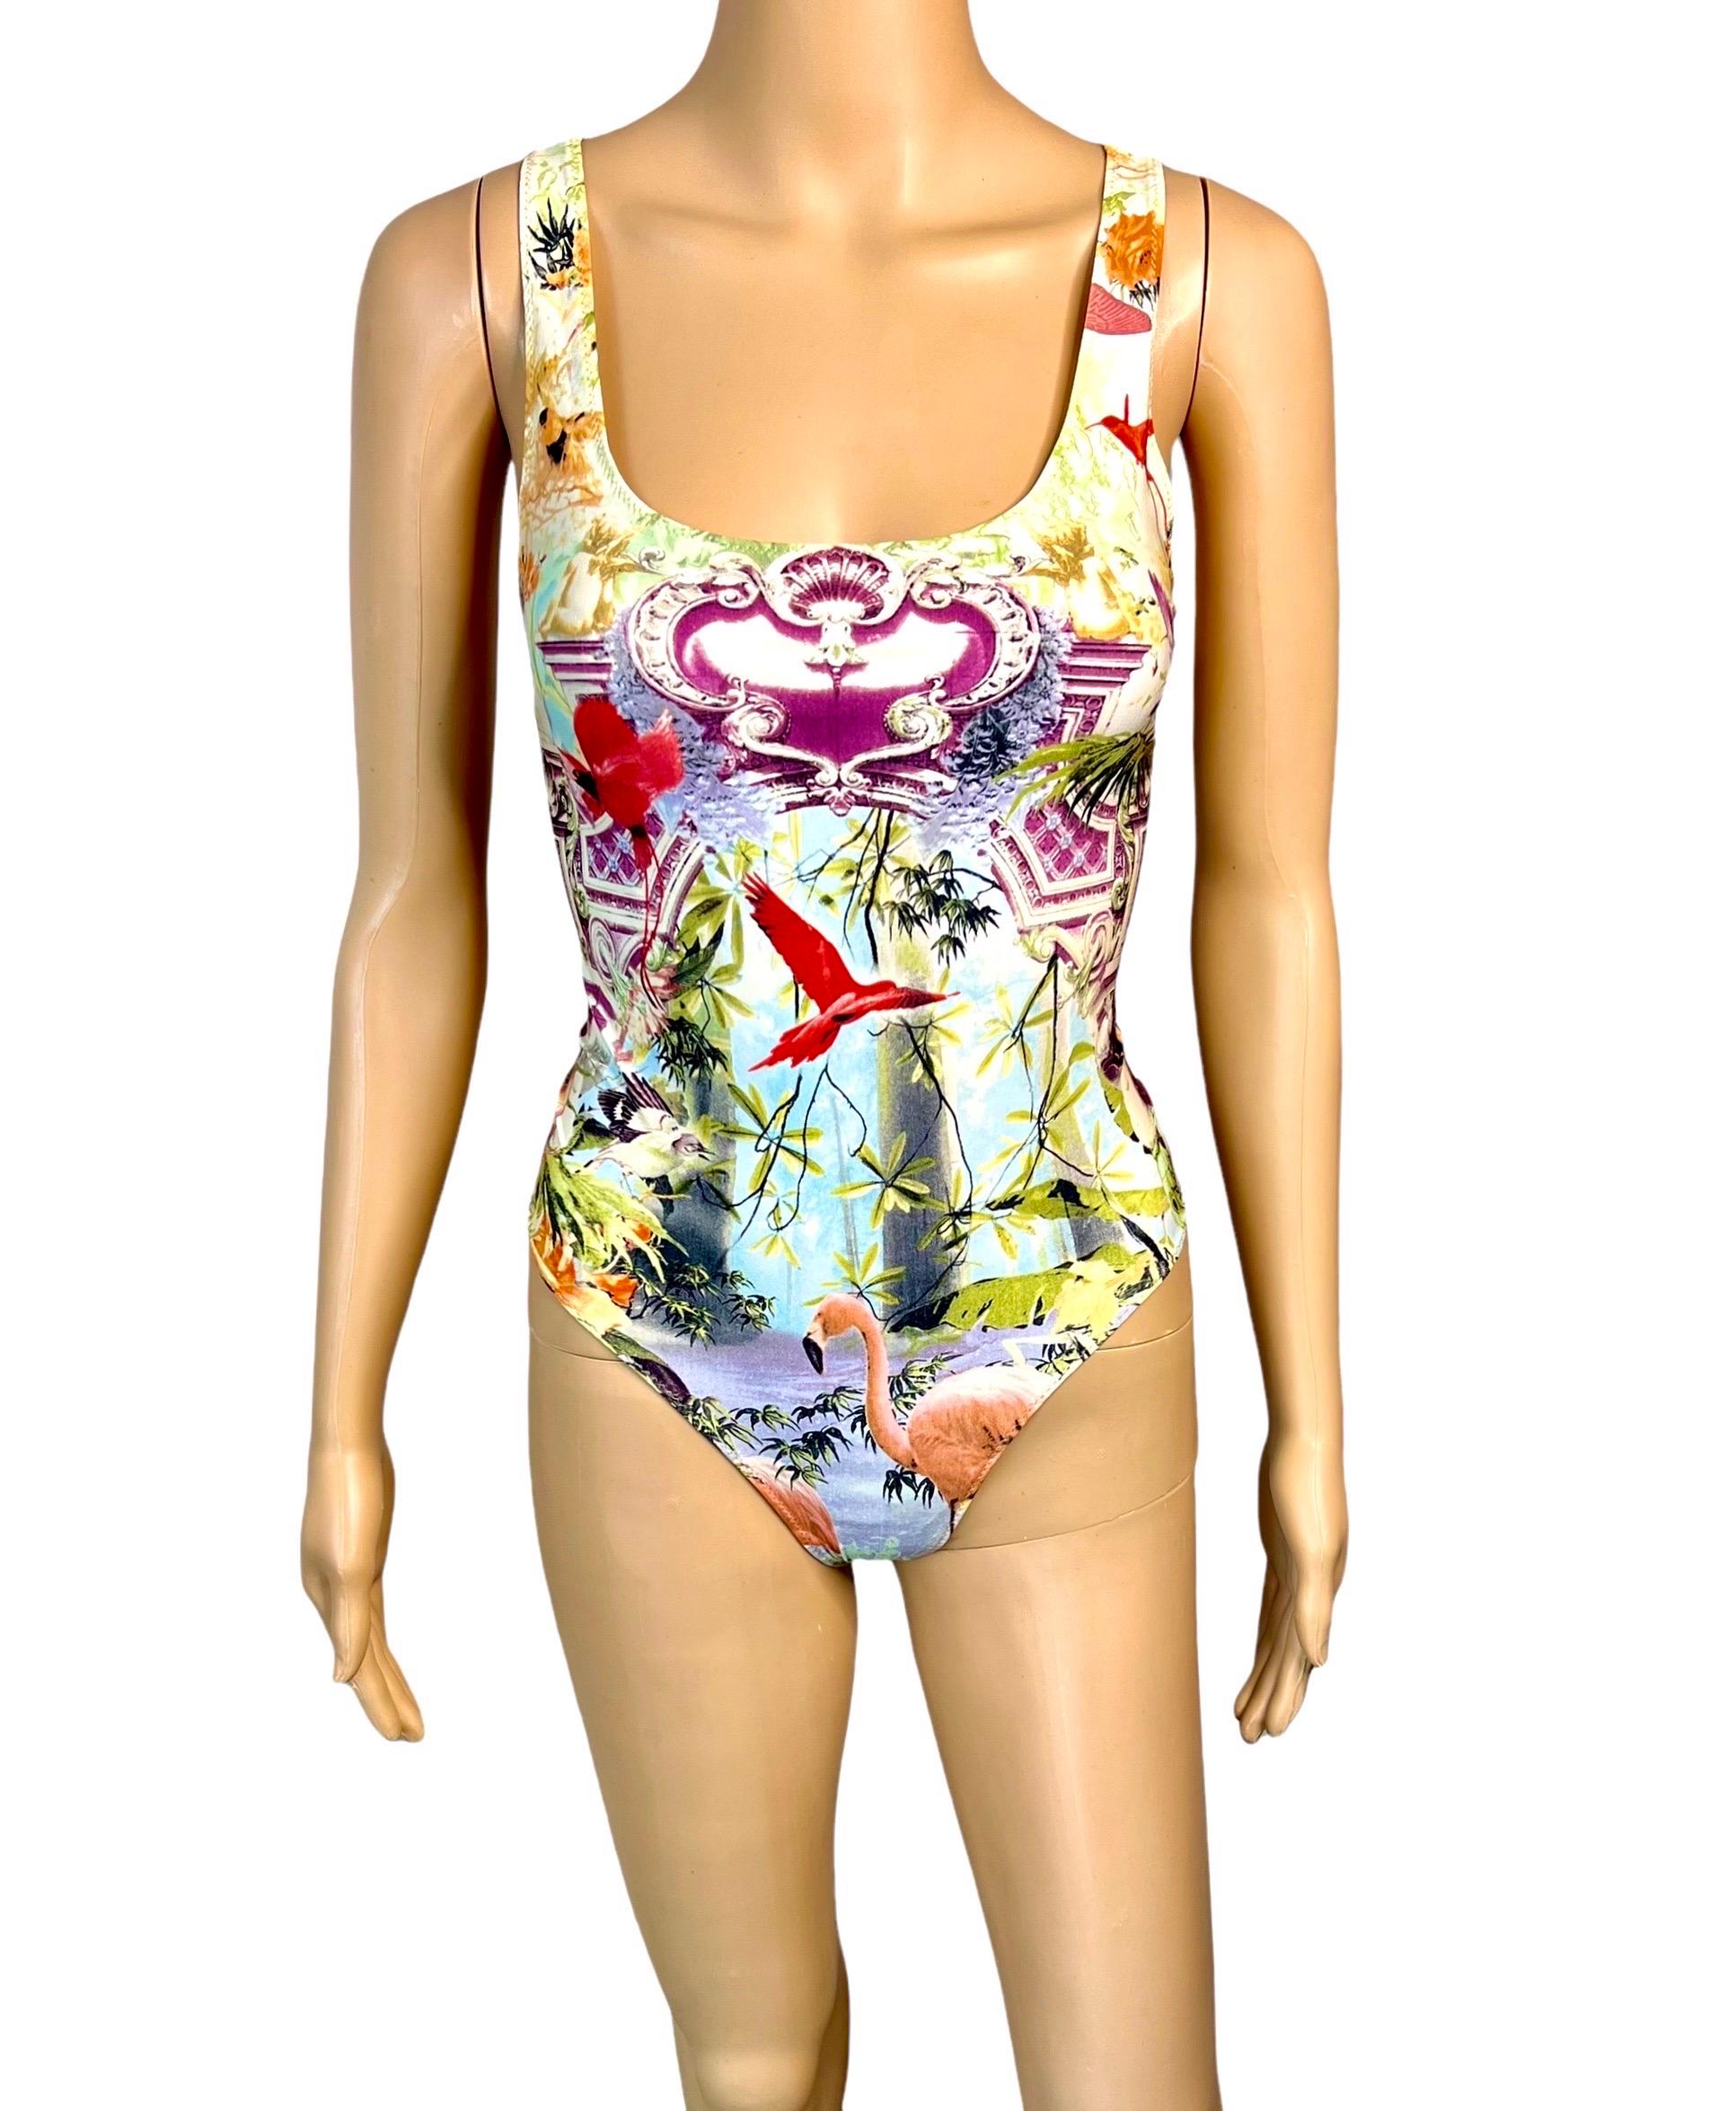 Jean Paul Gaultier Soleil S/S 1999 Flamingo Tropical Bodysuit Swimwear Swimsuit For Sale 1